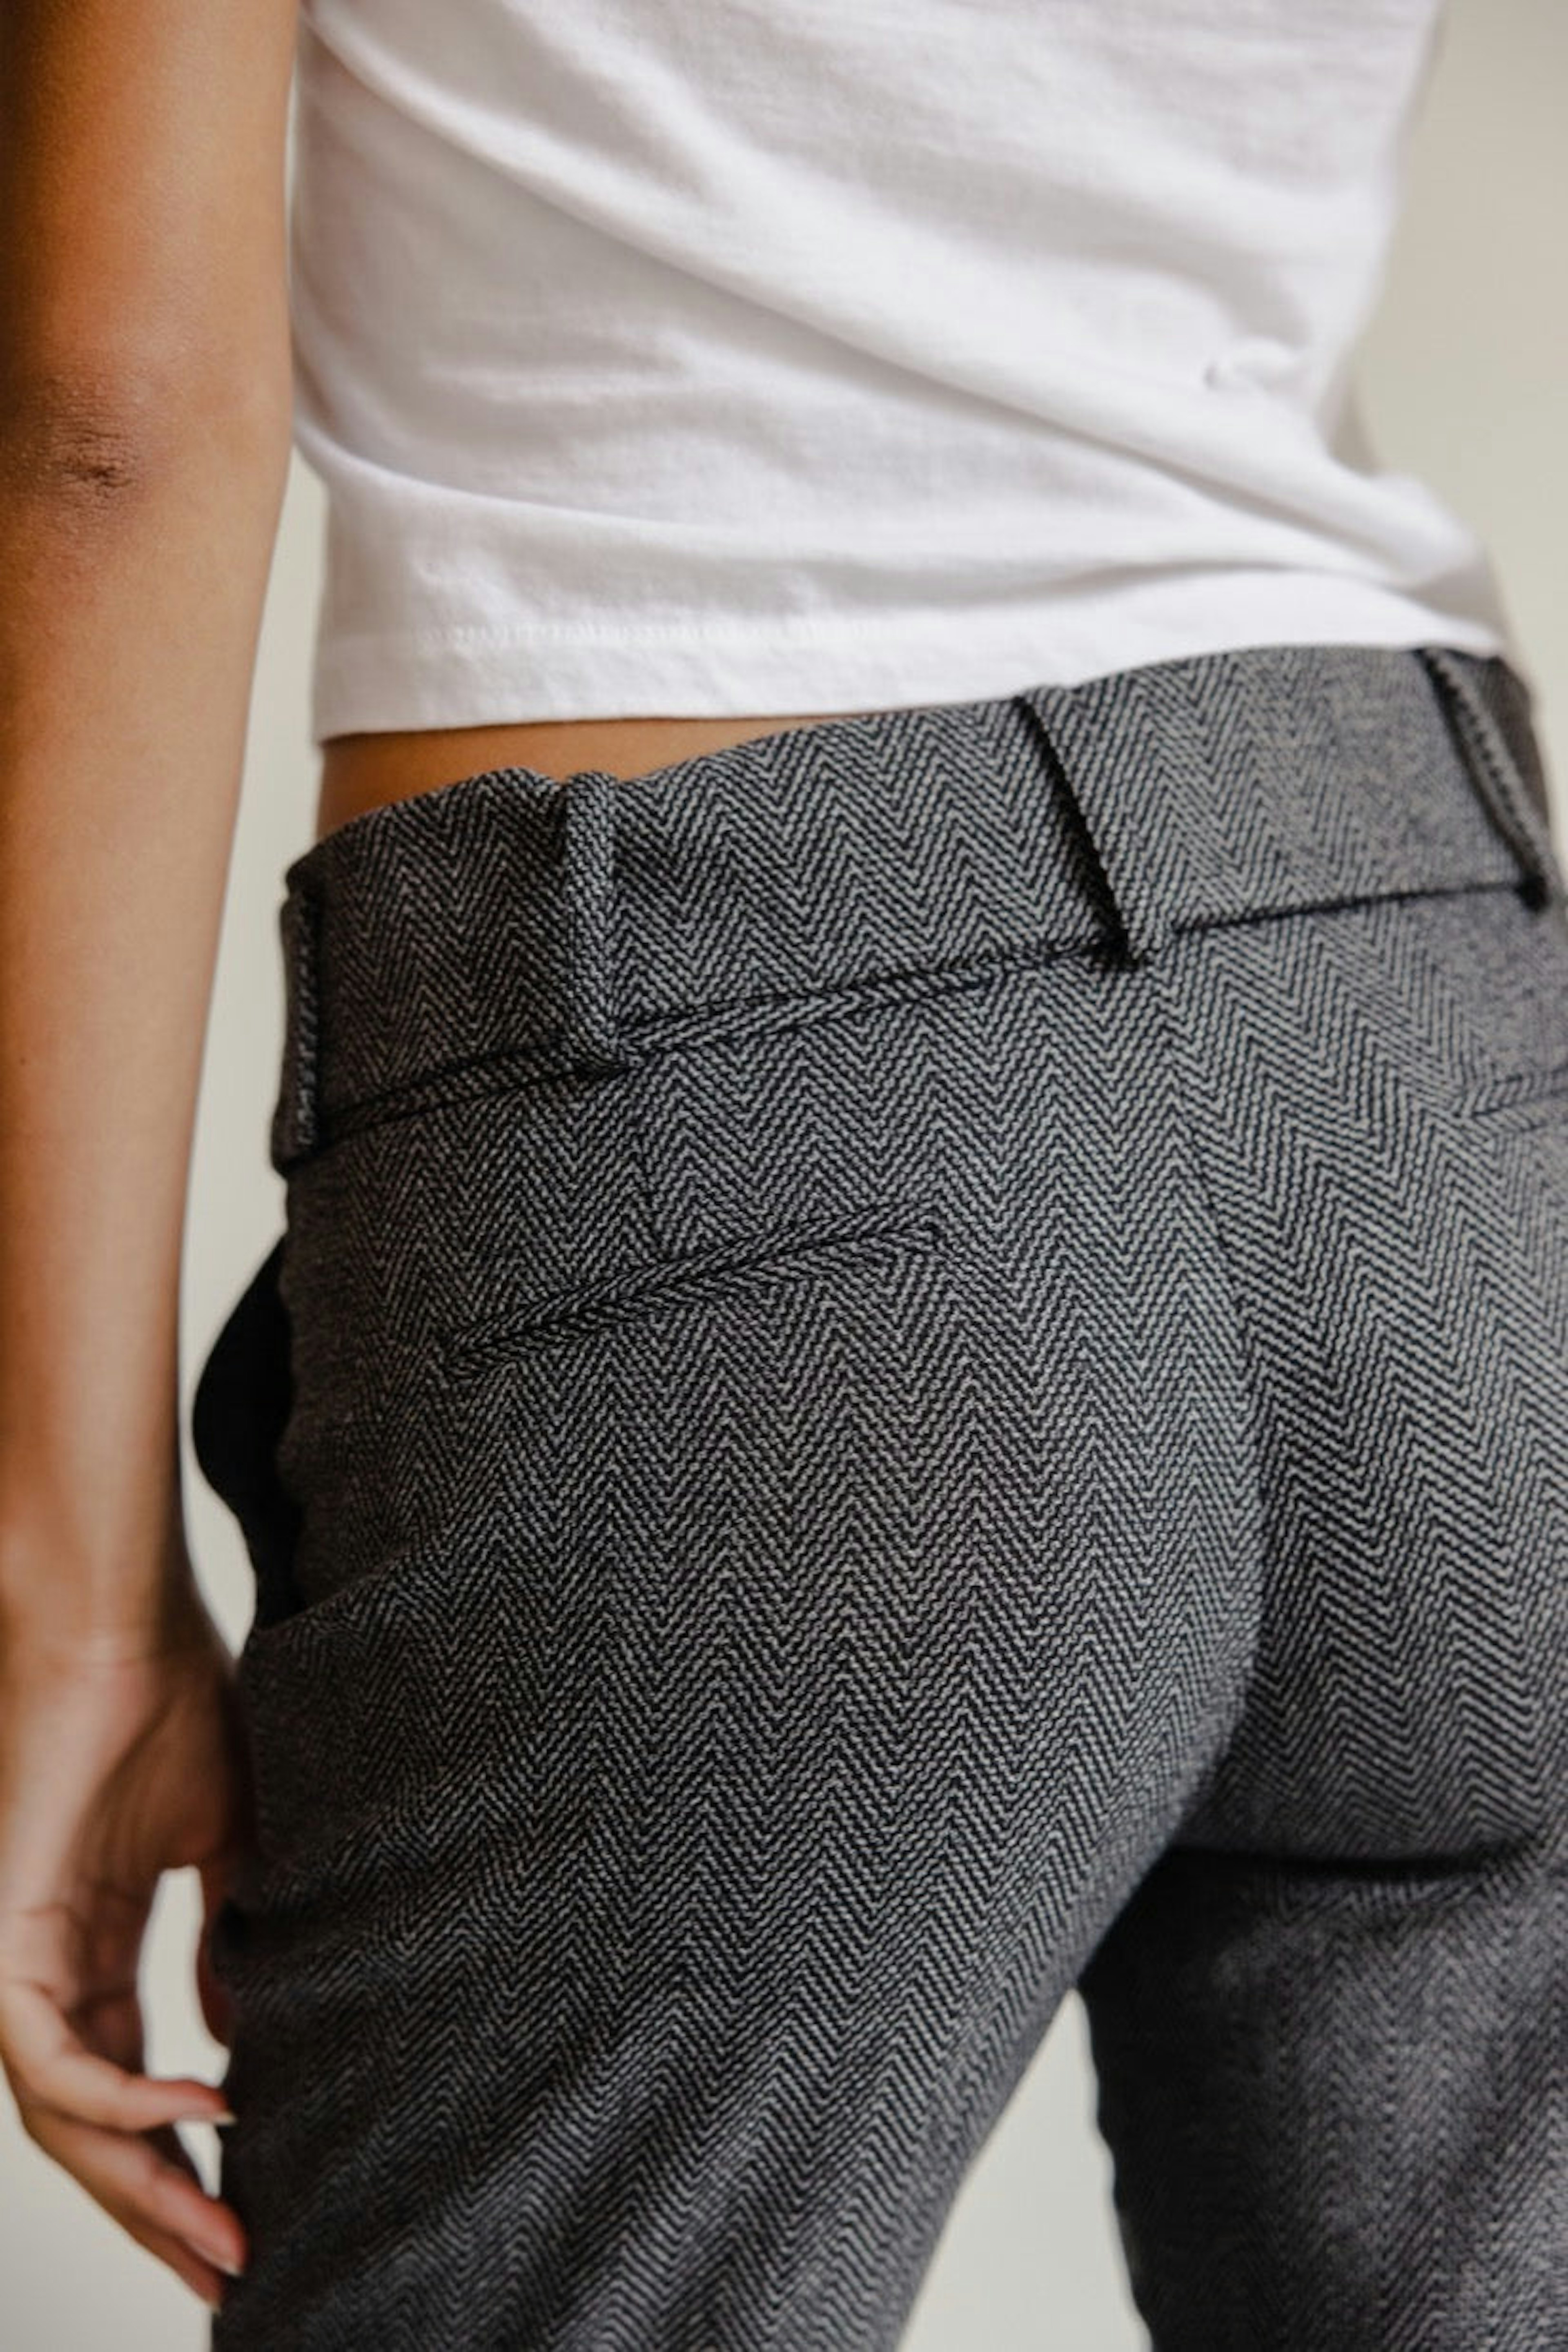 Buy pantalon taille basse stromboli by Musier Paris - Pants